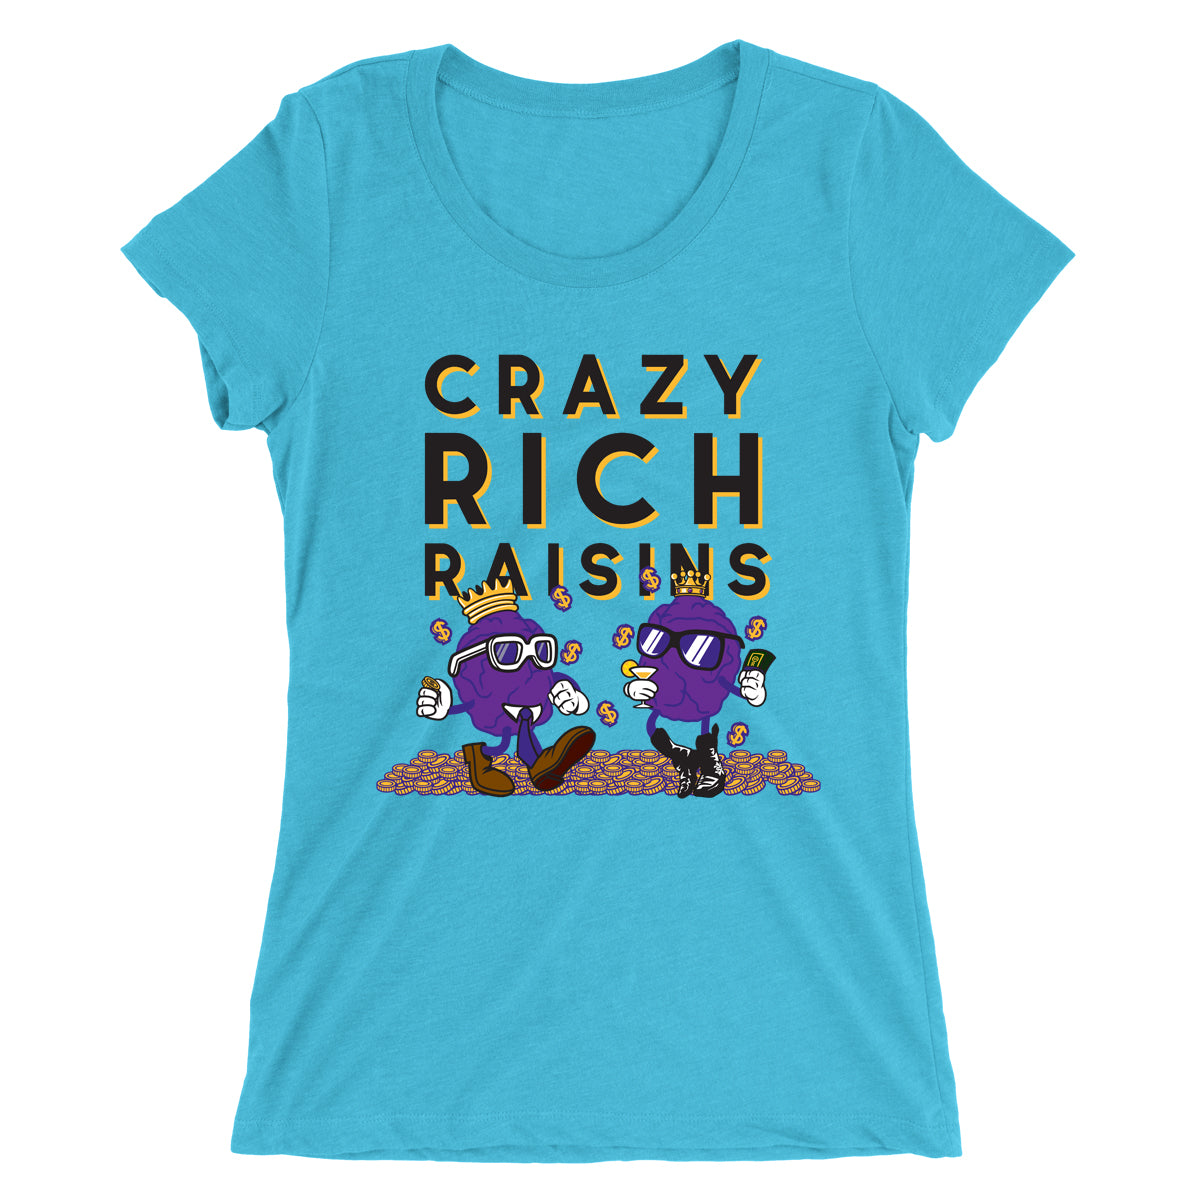 Movie The Food - Crazy Rich Raisins Women's T-Shirt - Caribbean Blue